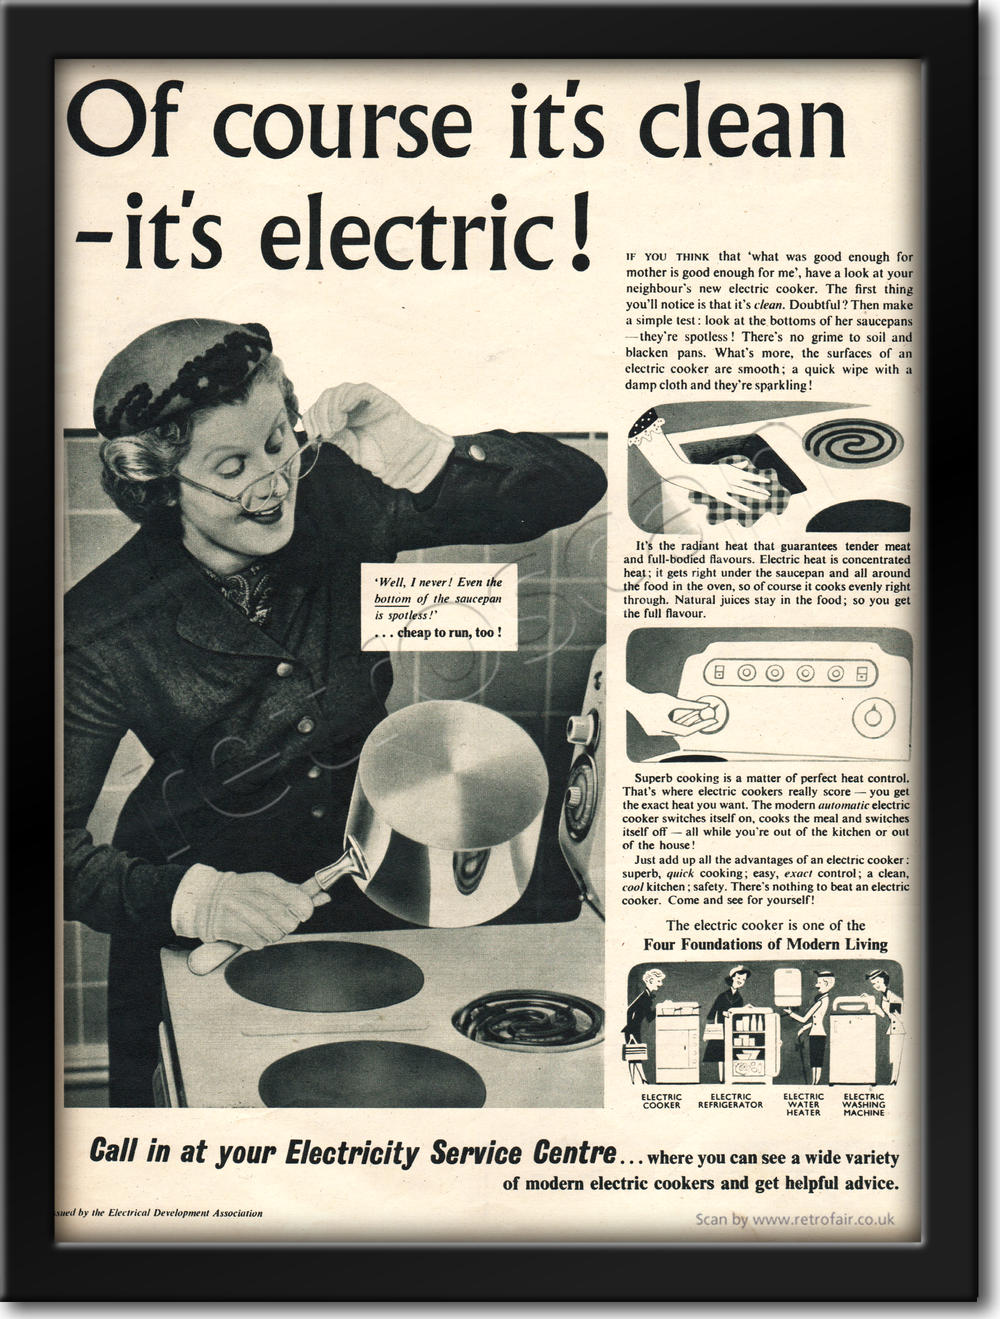 1955 vintage Electricity Service Centres advert